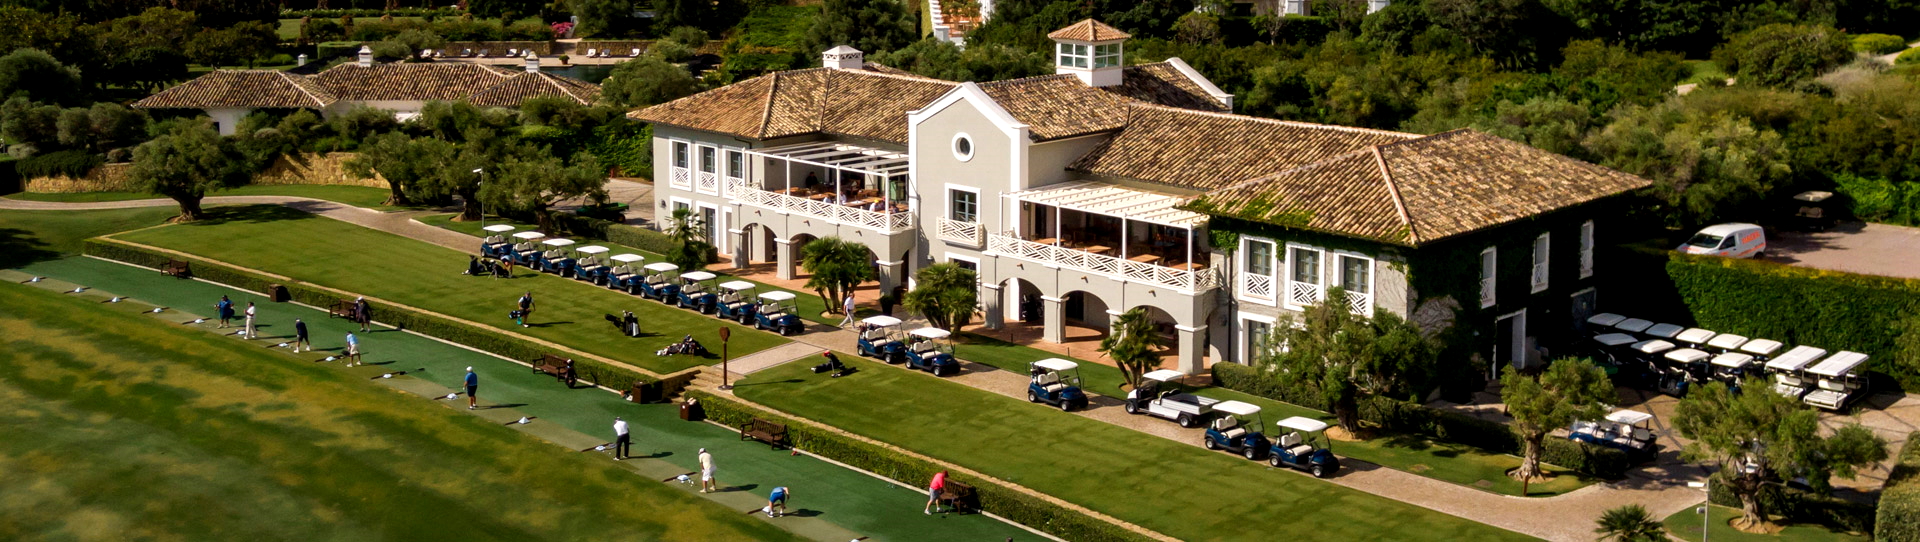 Spain golf courses - Finca Cortesin Golf - Photo 2